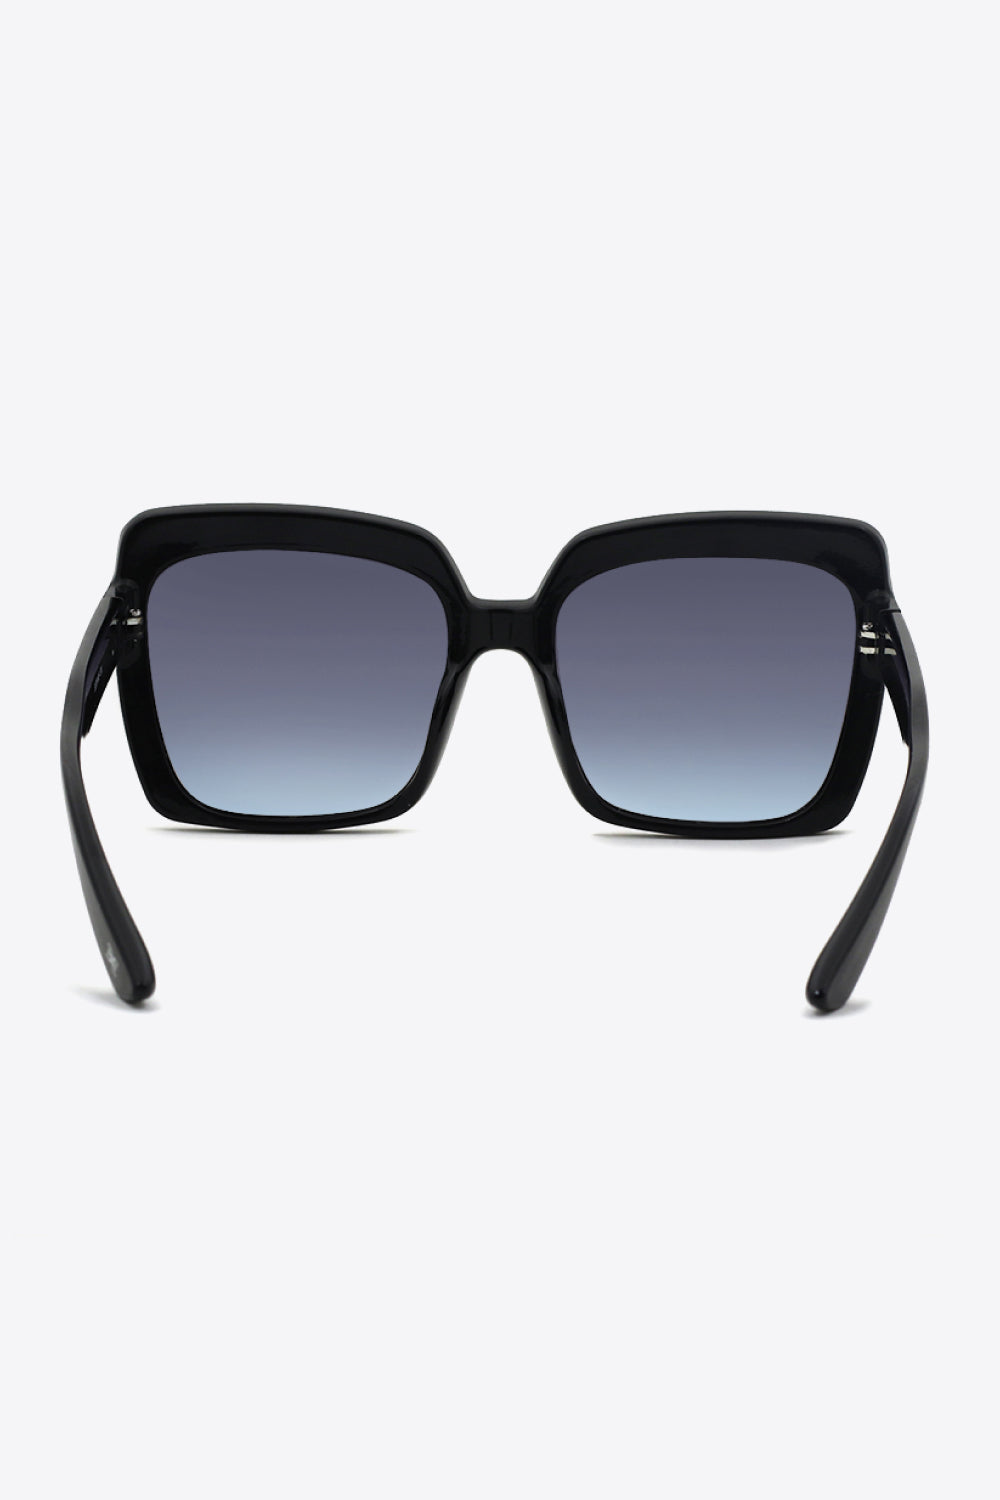 Square Full Rim Sunglasses - BEAUTY COSMOTICS SHOP